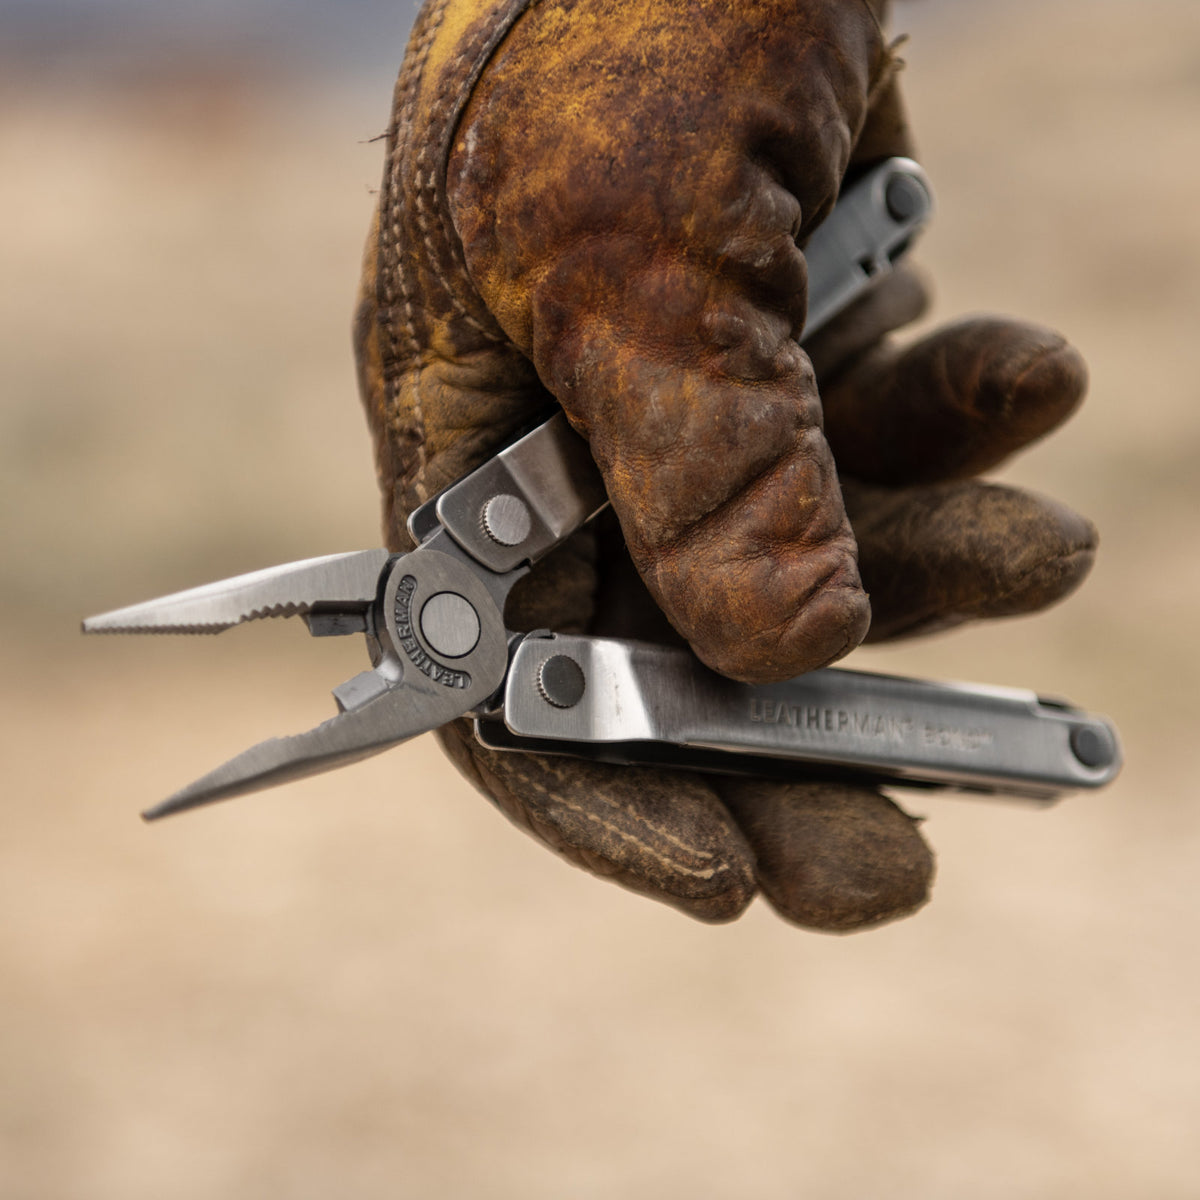 Leatherman Tools at Knife Shop